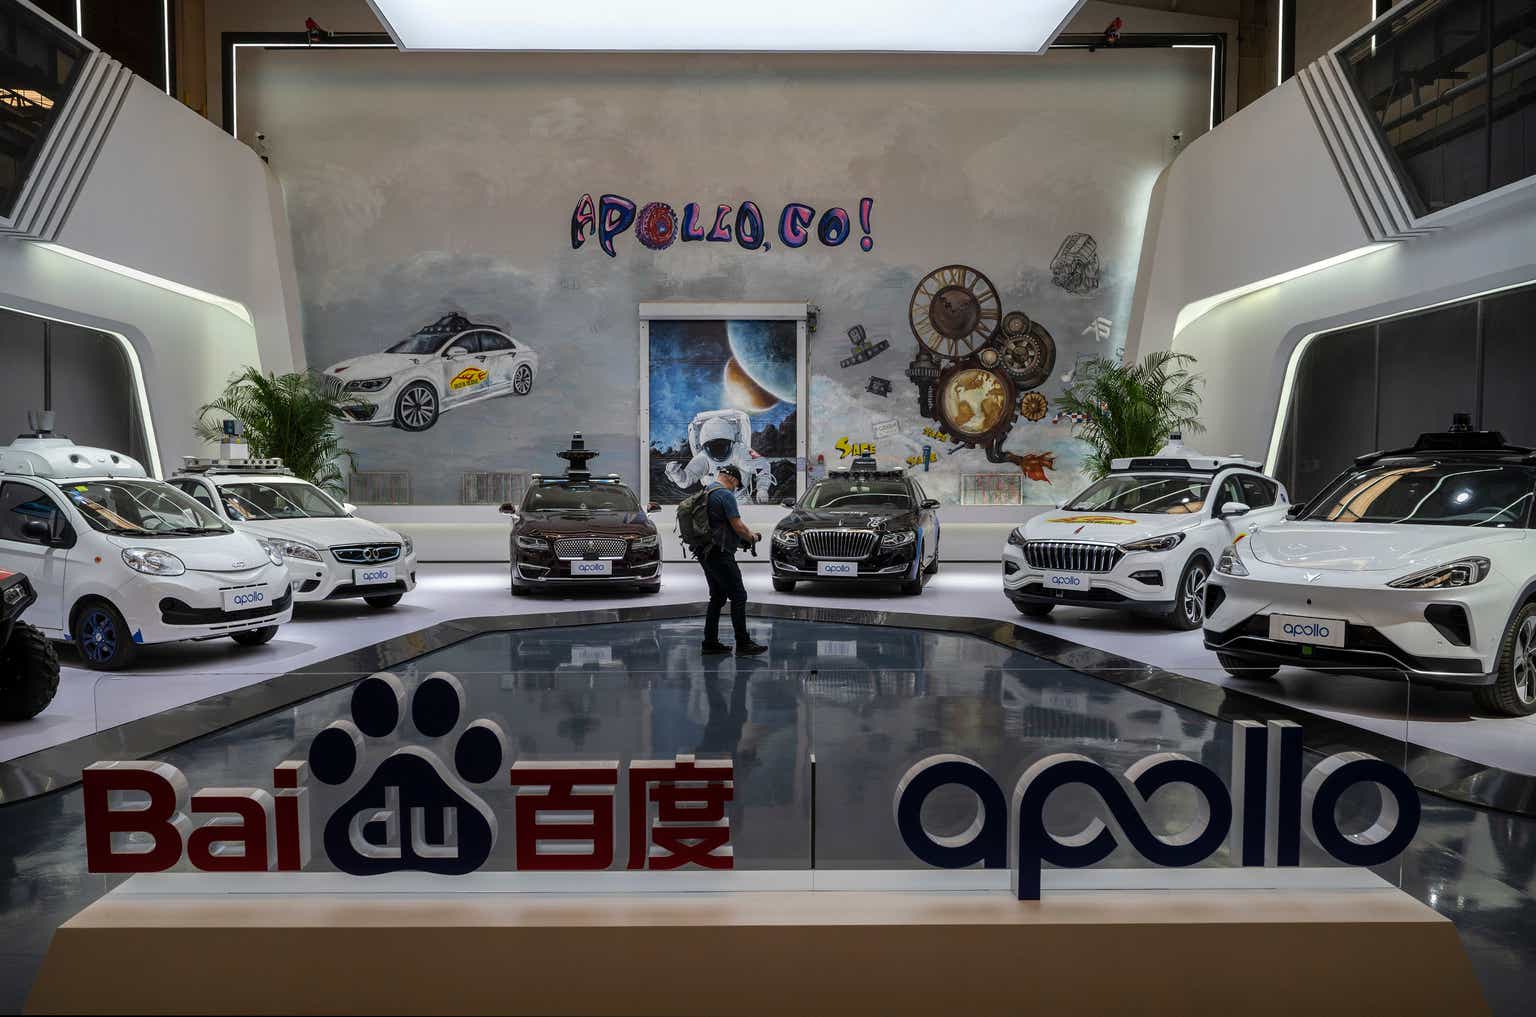 Baidu: From Apollo To Ernie - Fueling Growth With Innovative Ventures (NASDAQ:BIDU)